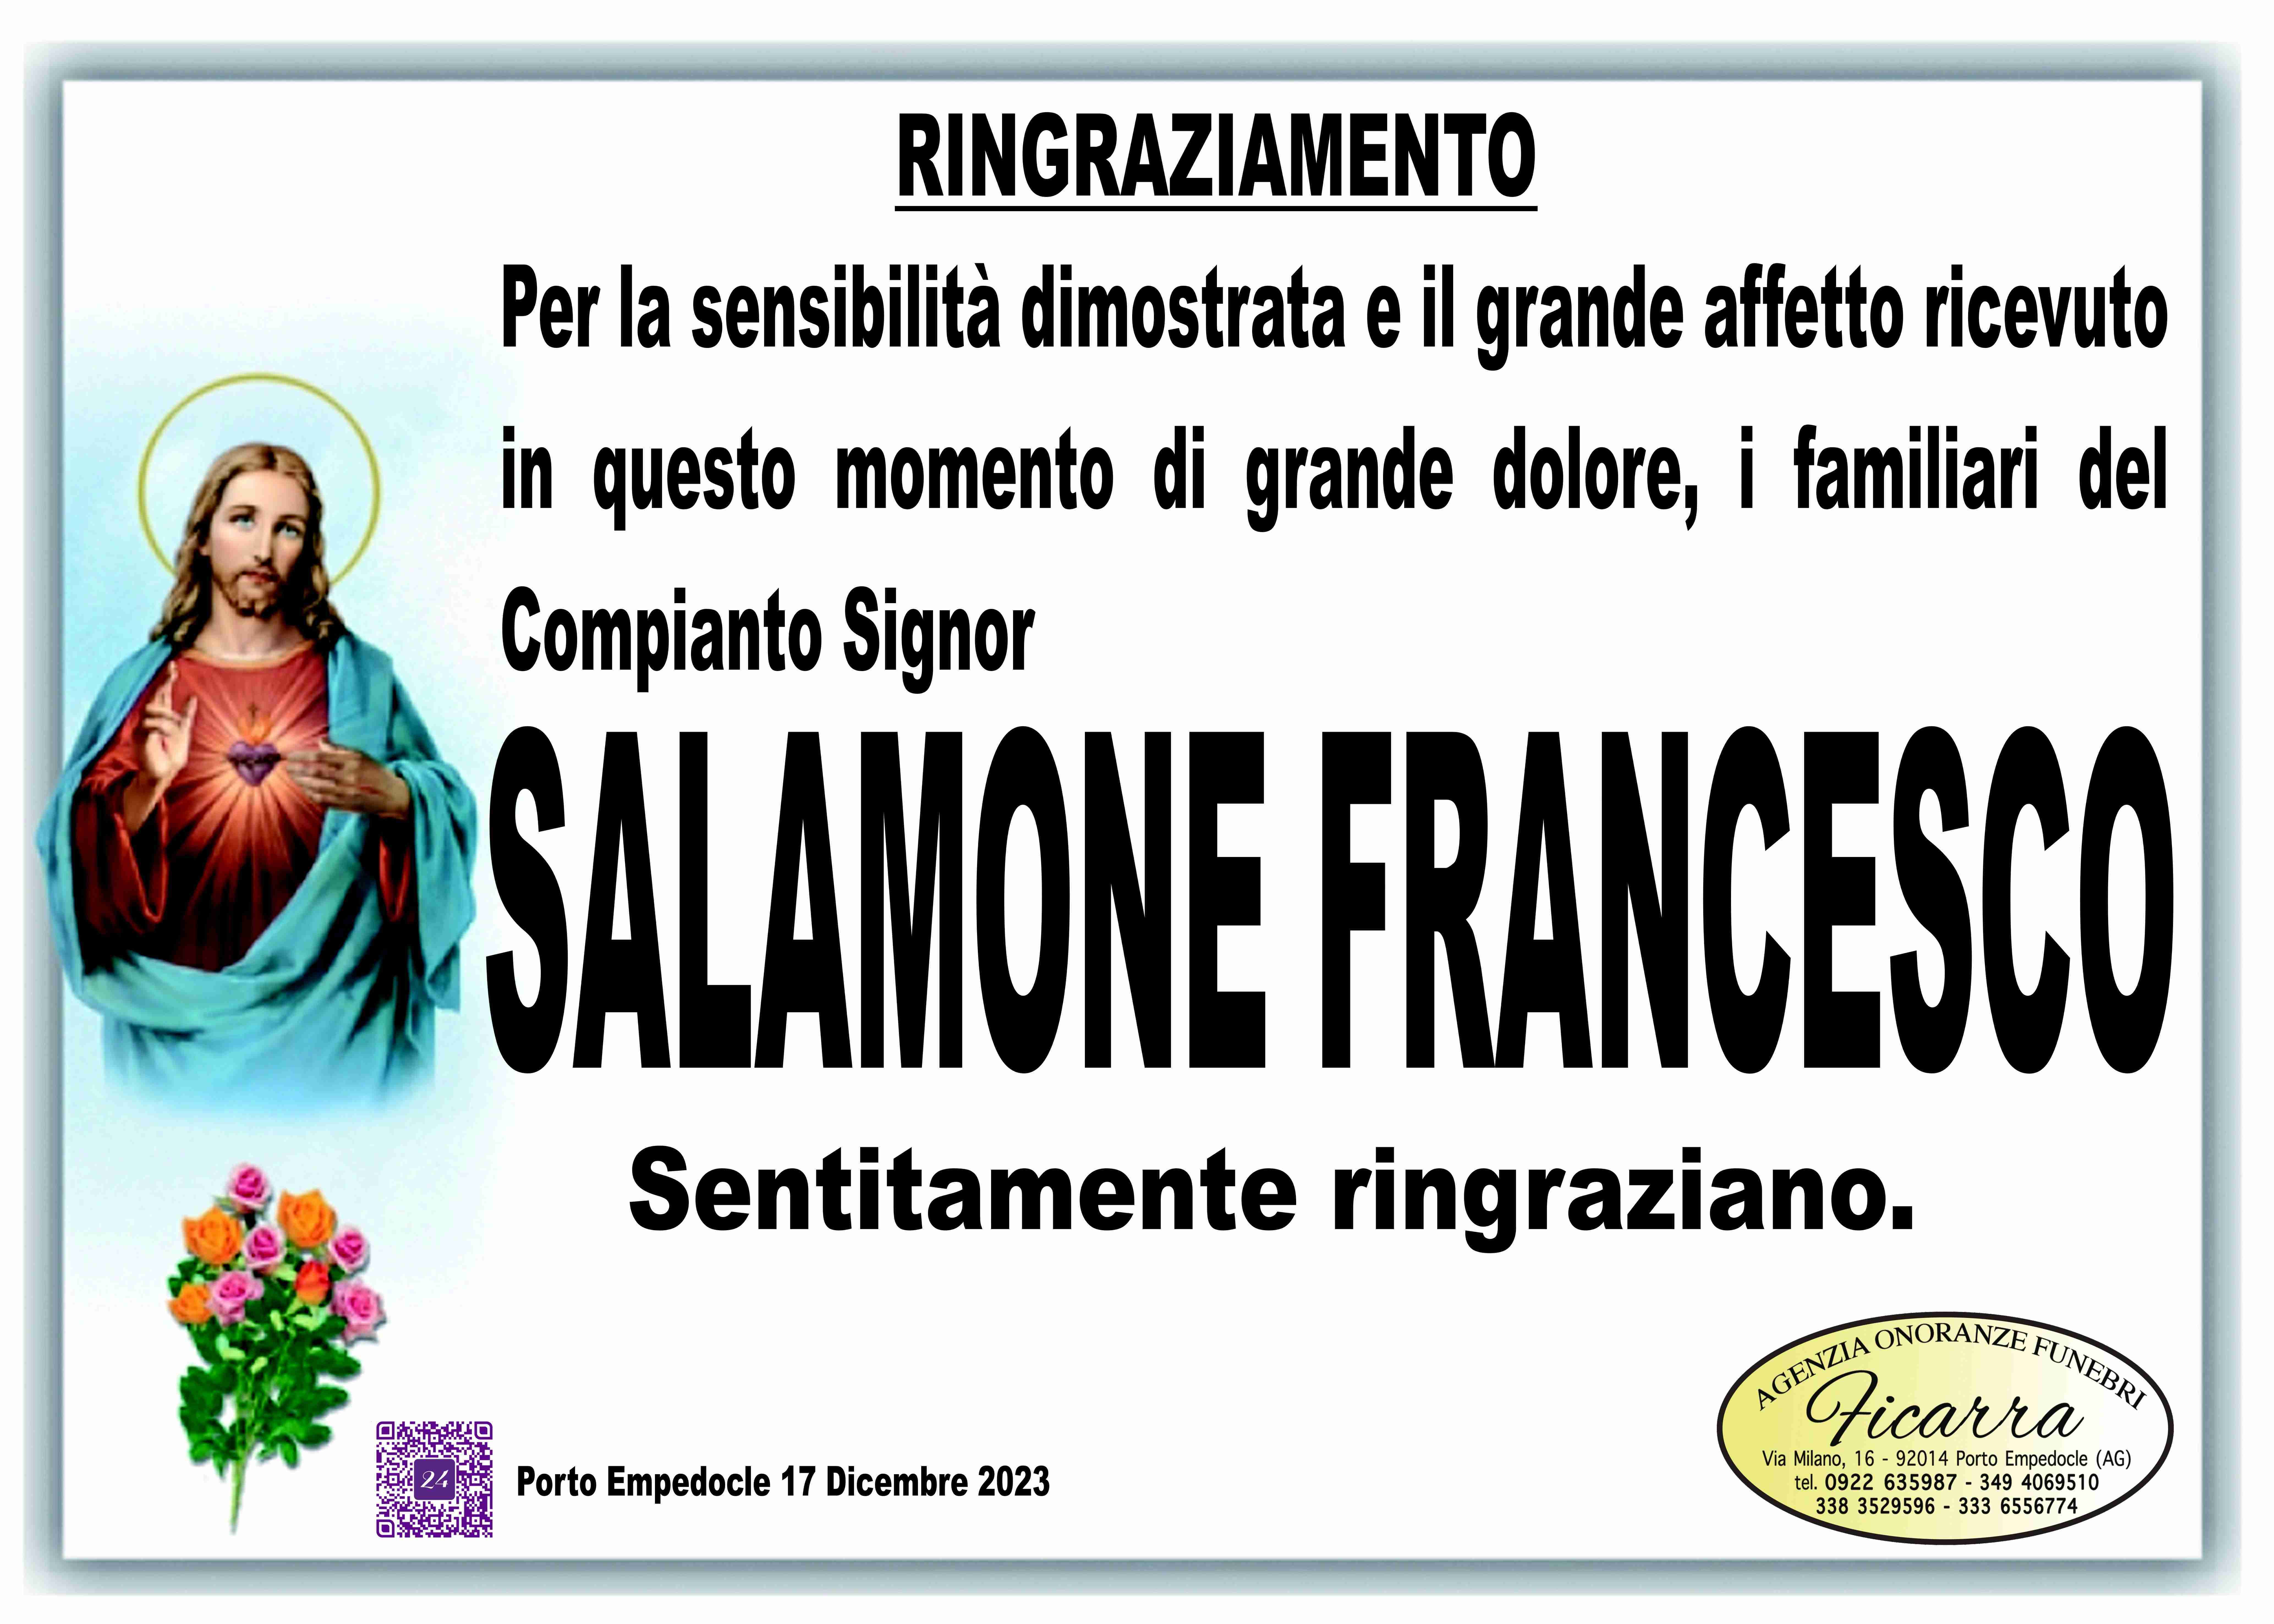 Francesco Salamone